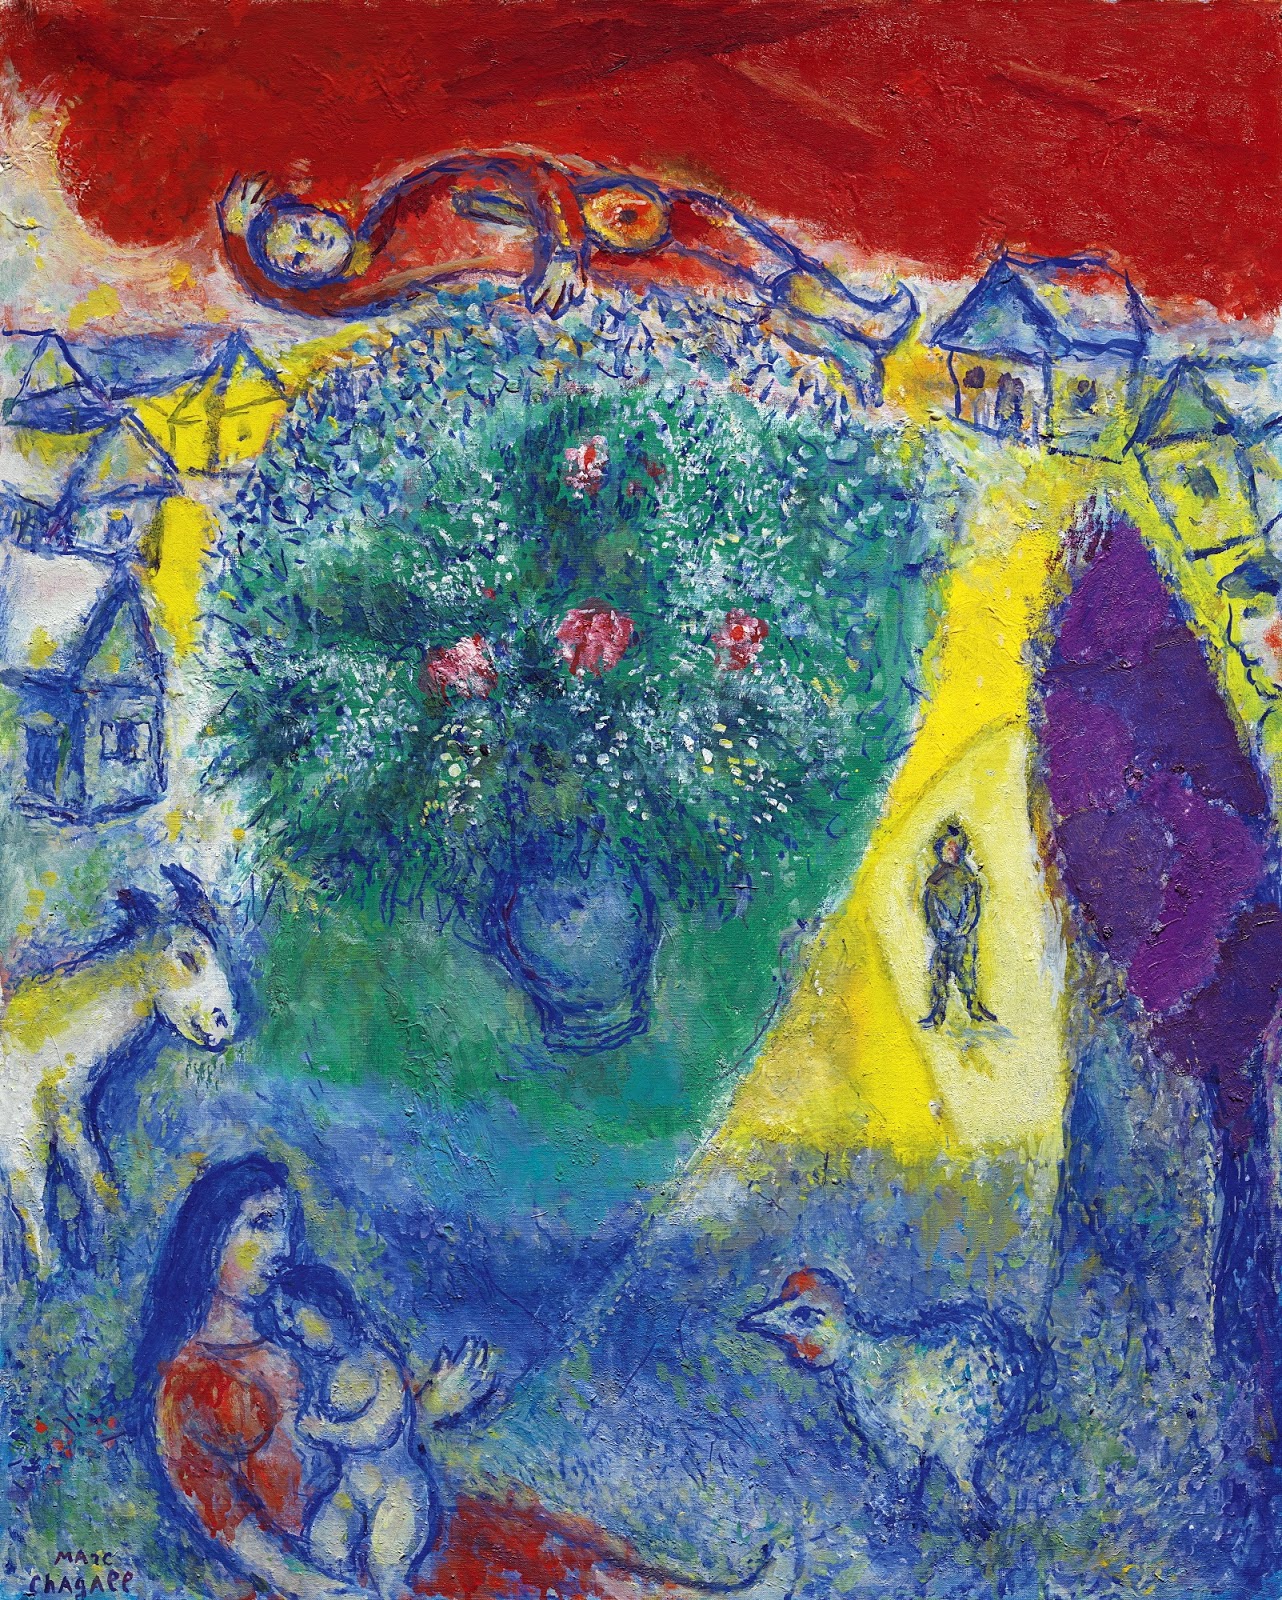 Marc+Chagall-1887-1985 (226).jpg